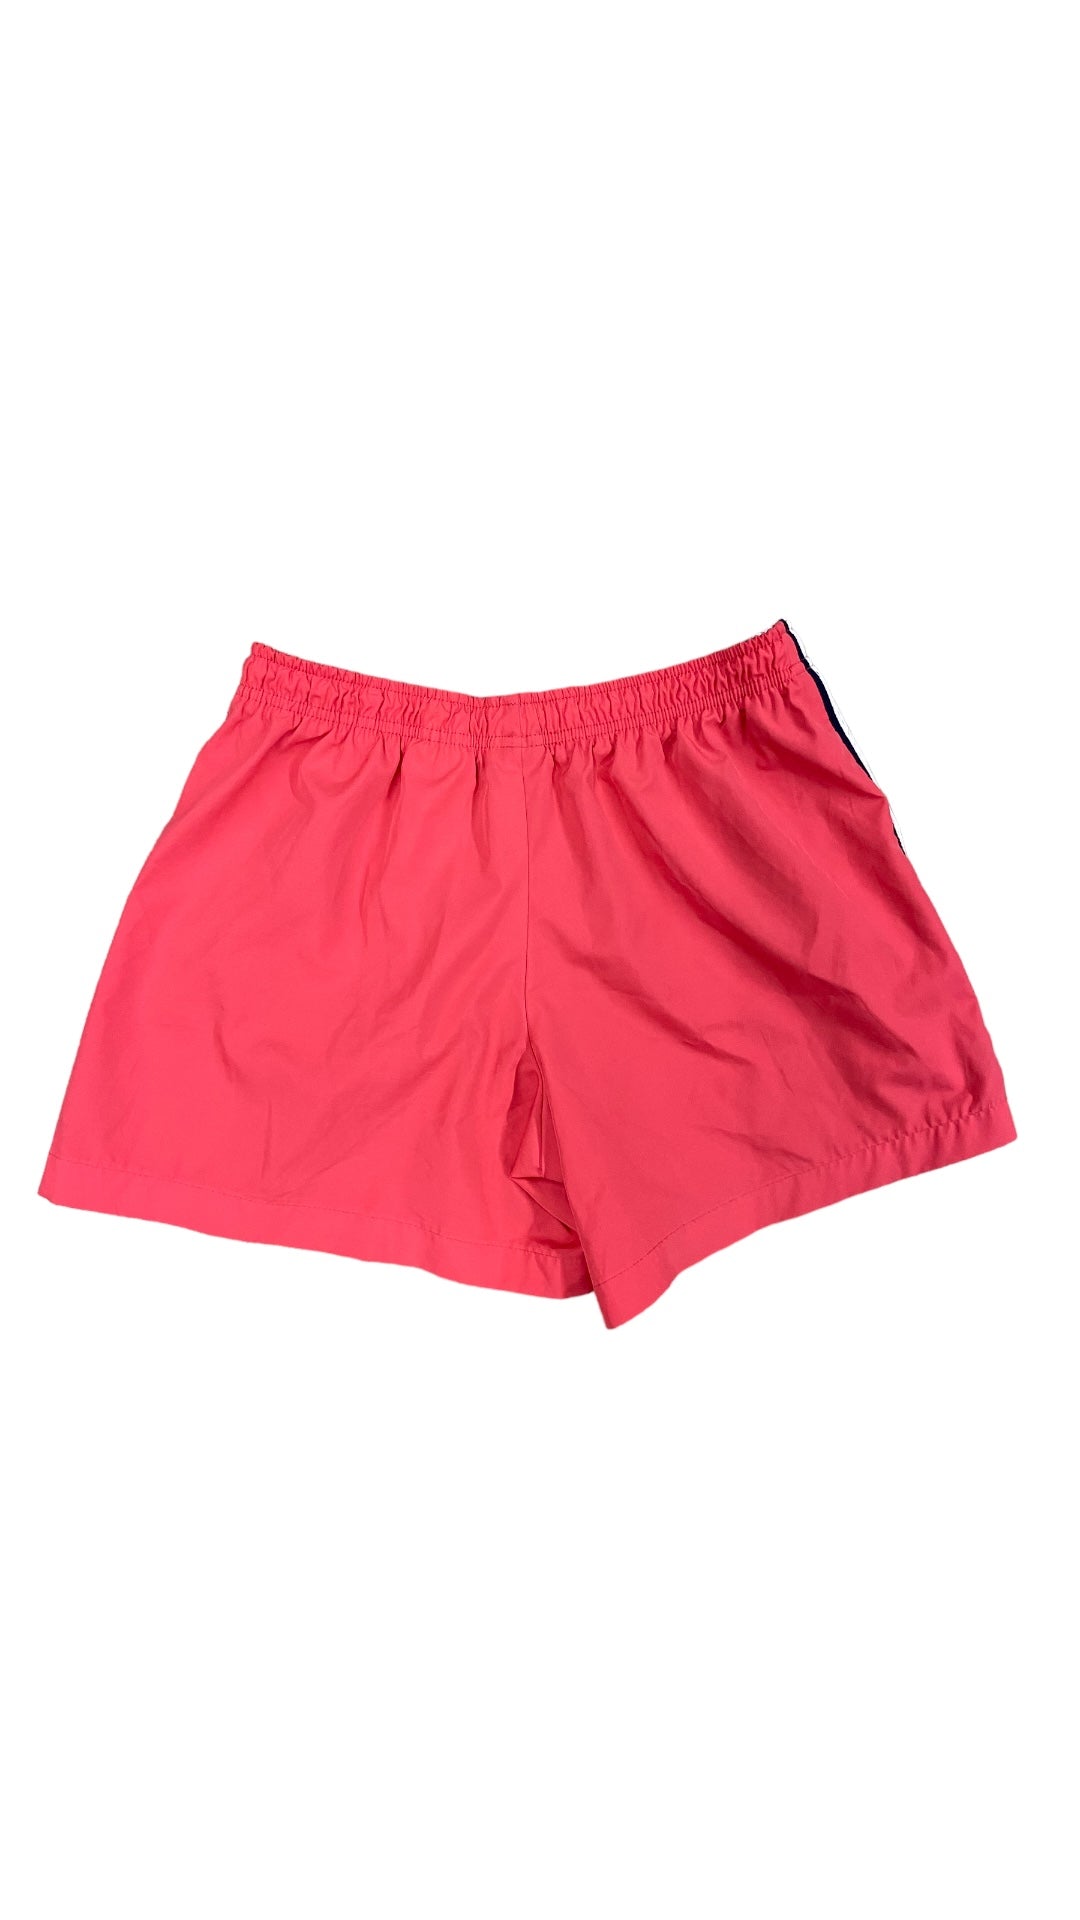 Wmns Nike Dri-Fit Salmon Pink Shorts Sz S